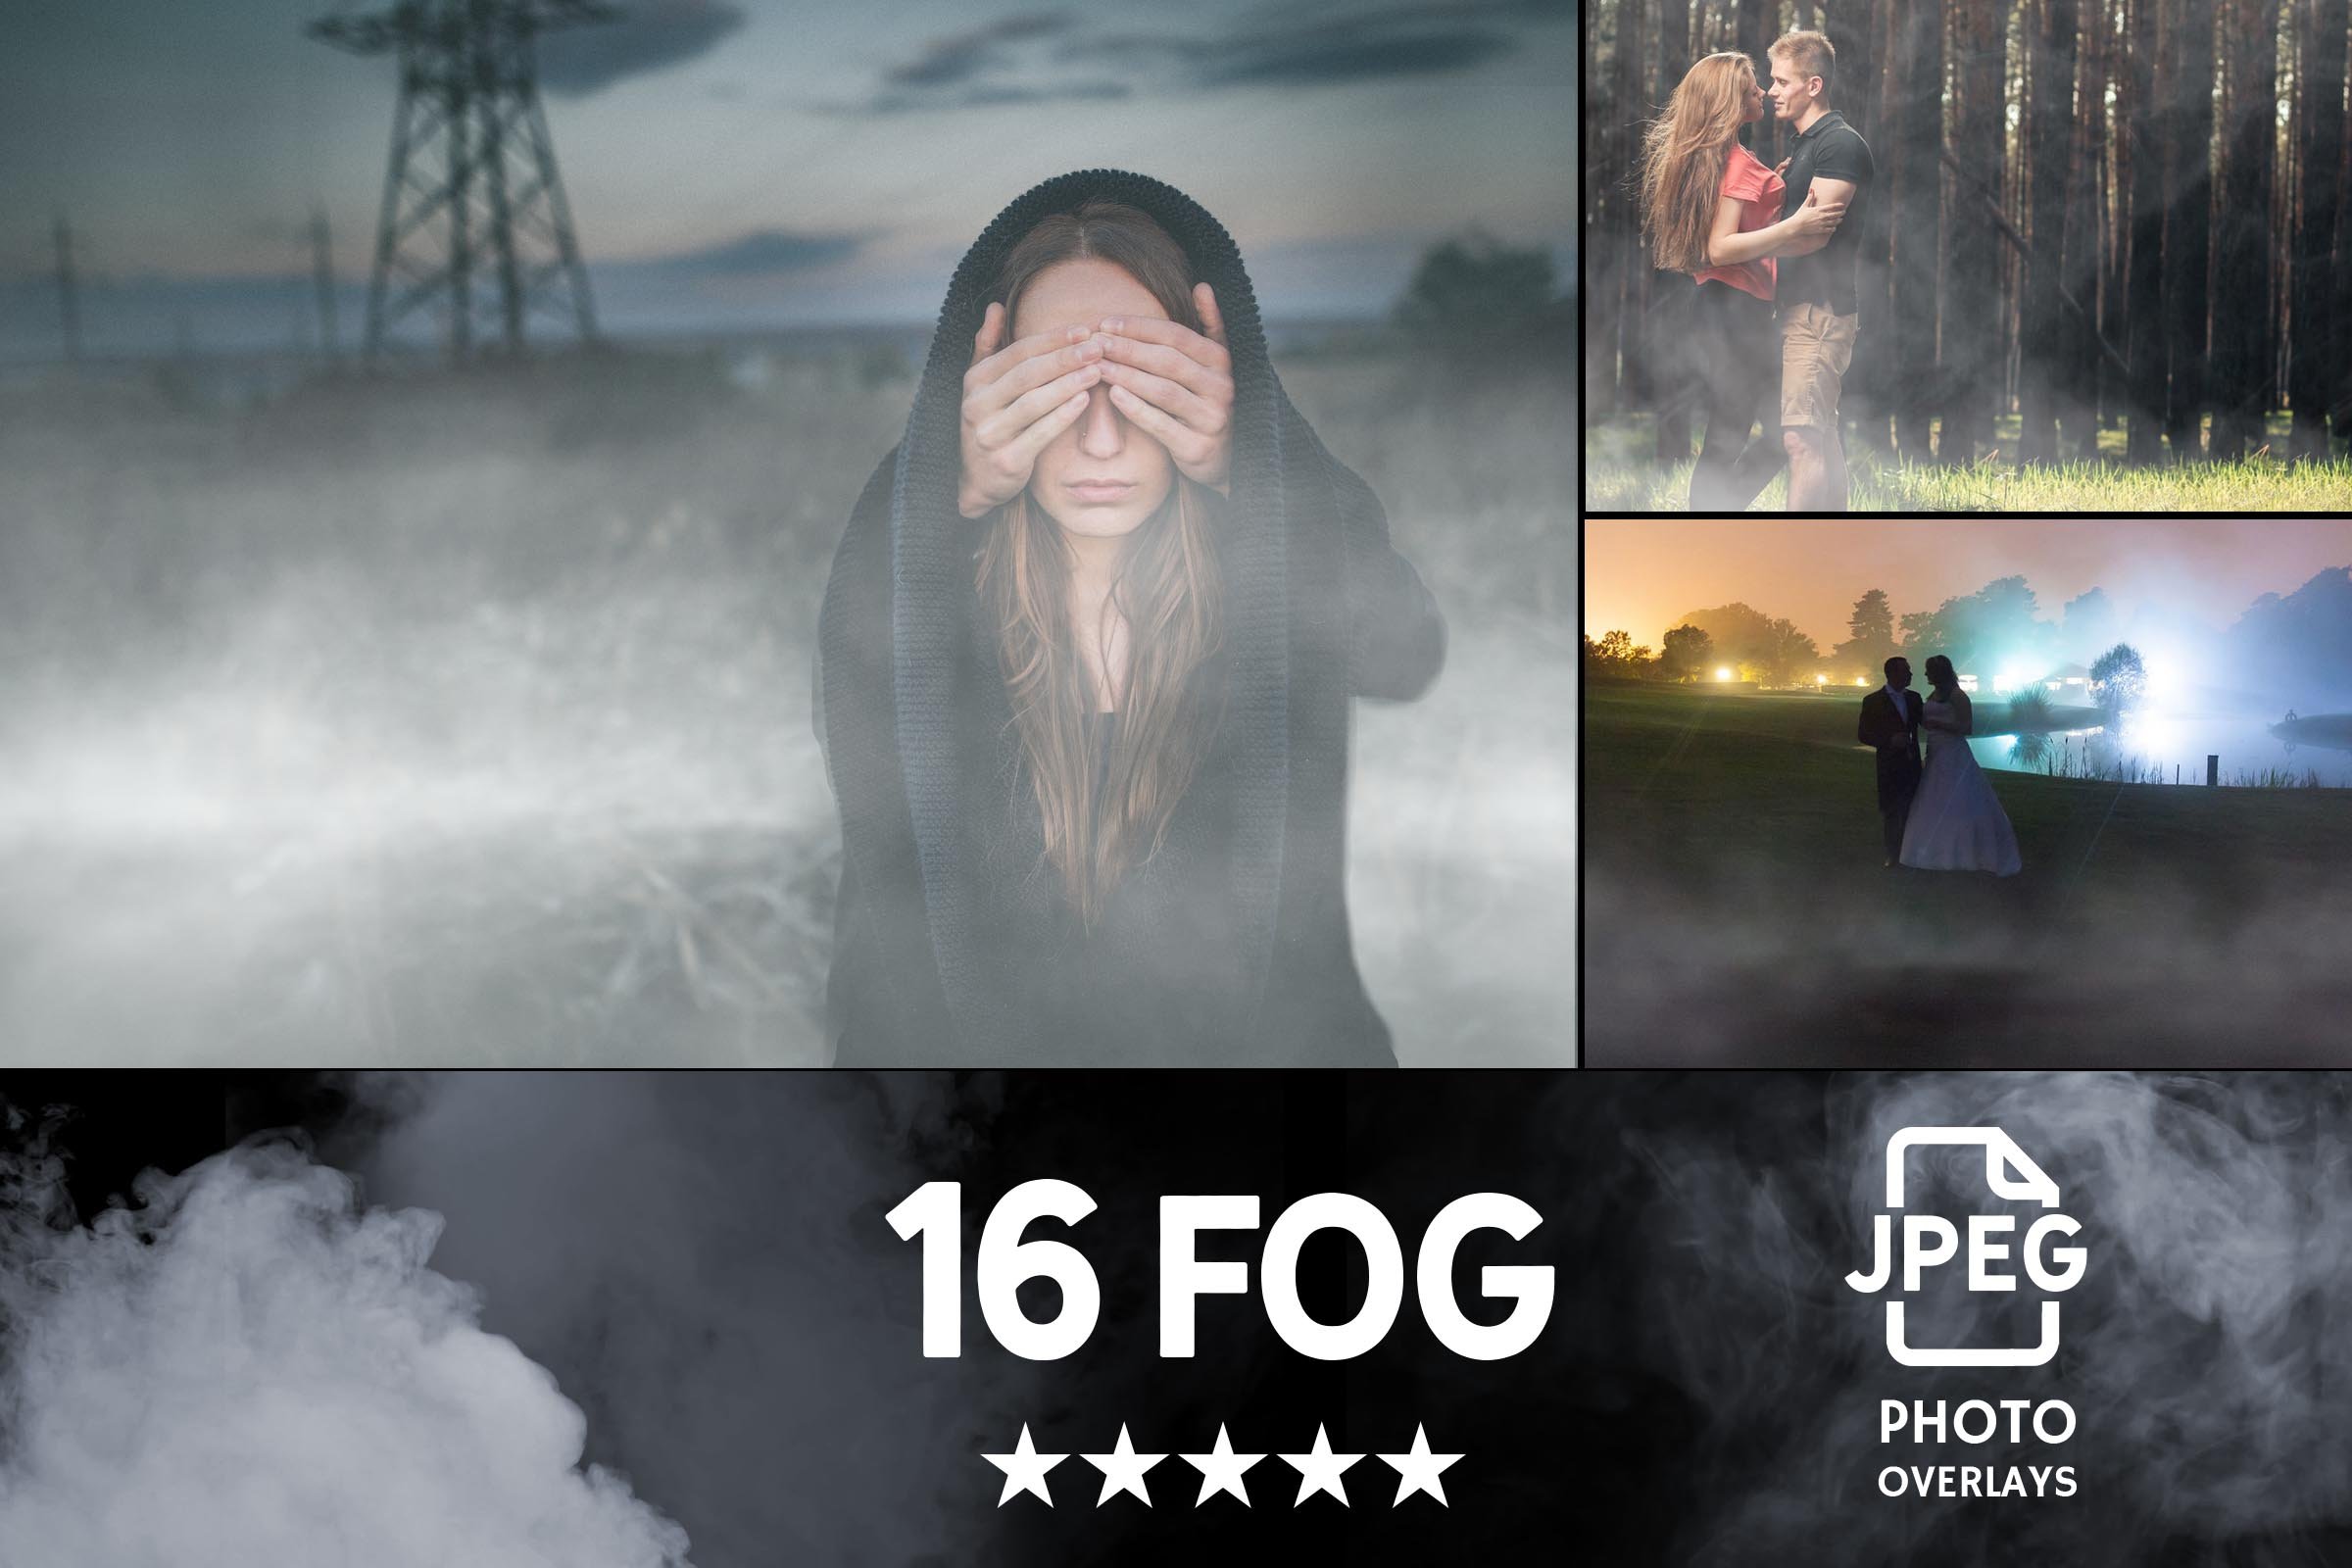 018. 16 fog photo overlays 212